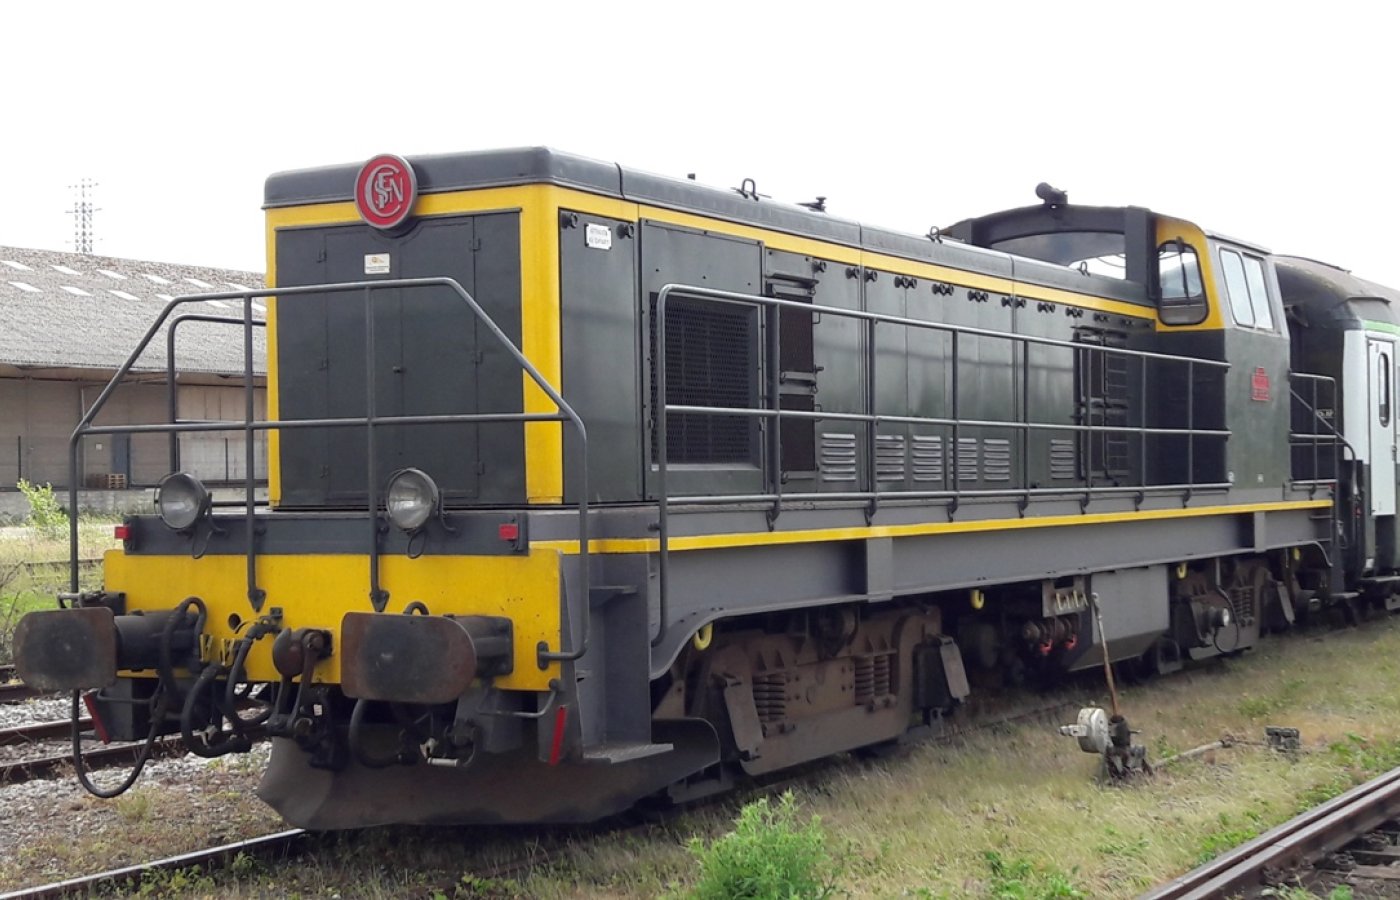 BB 63852 - Diesel-electric locomotive